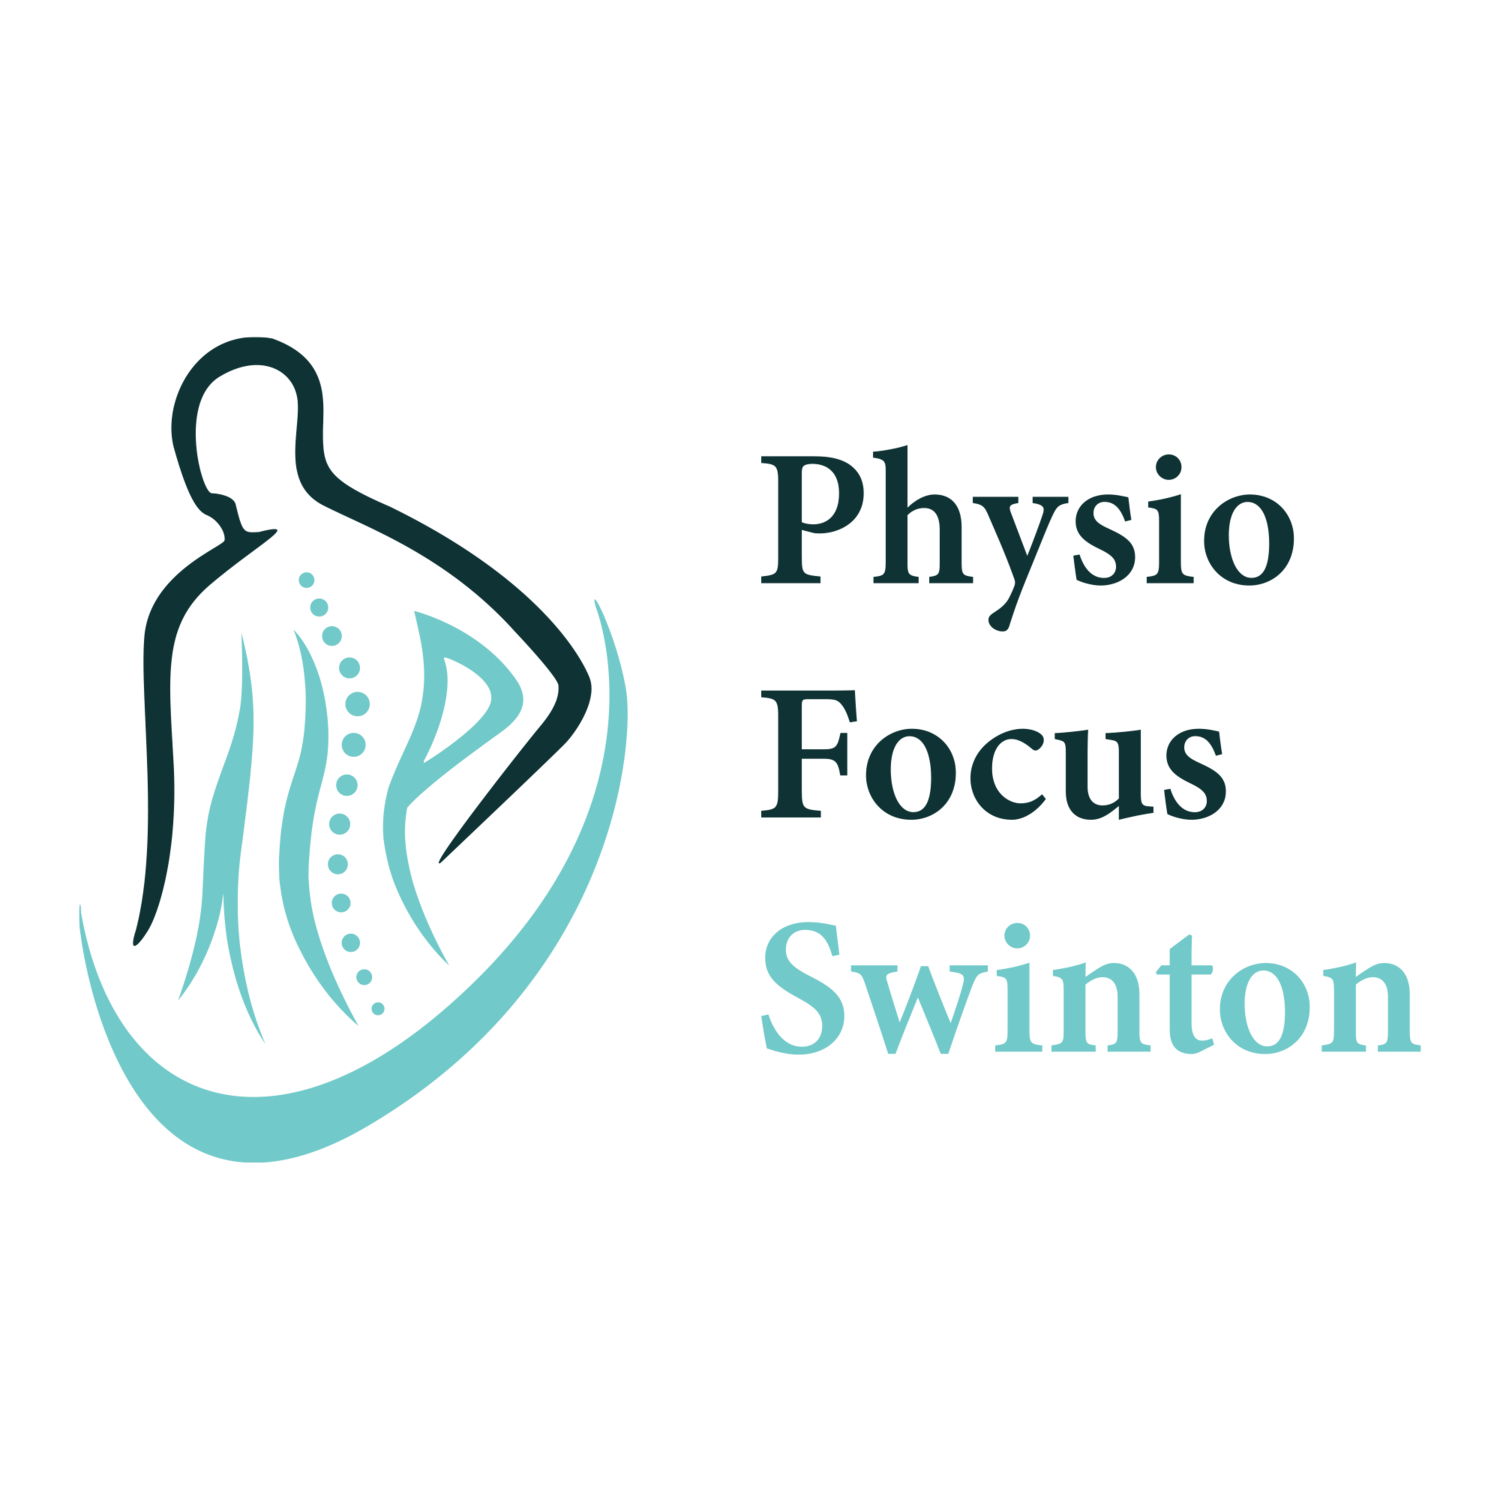 Physio Focus Swinton